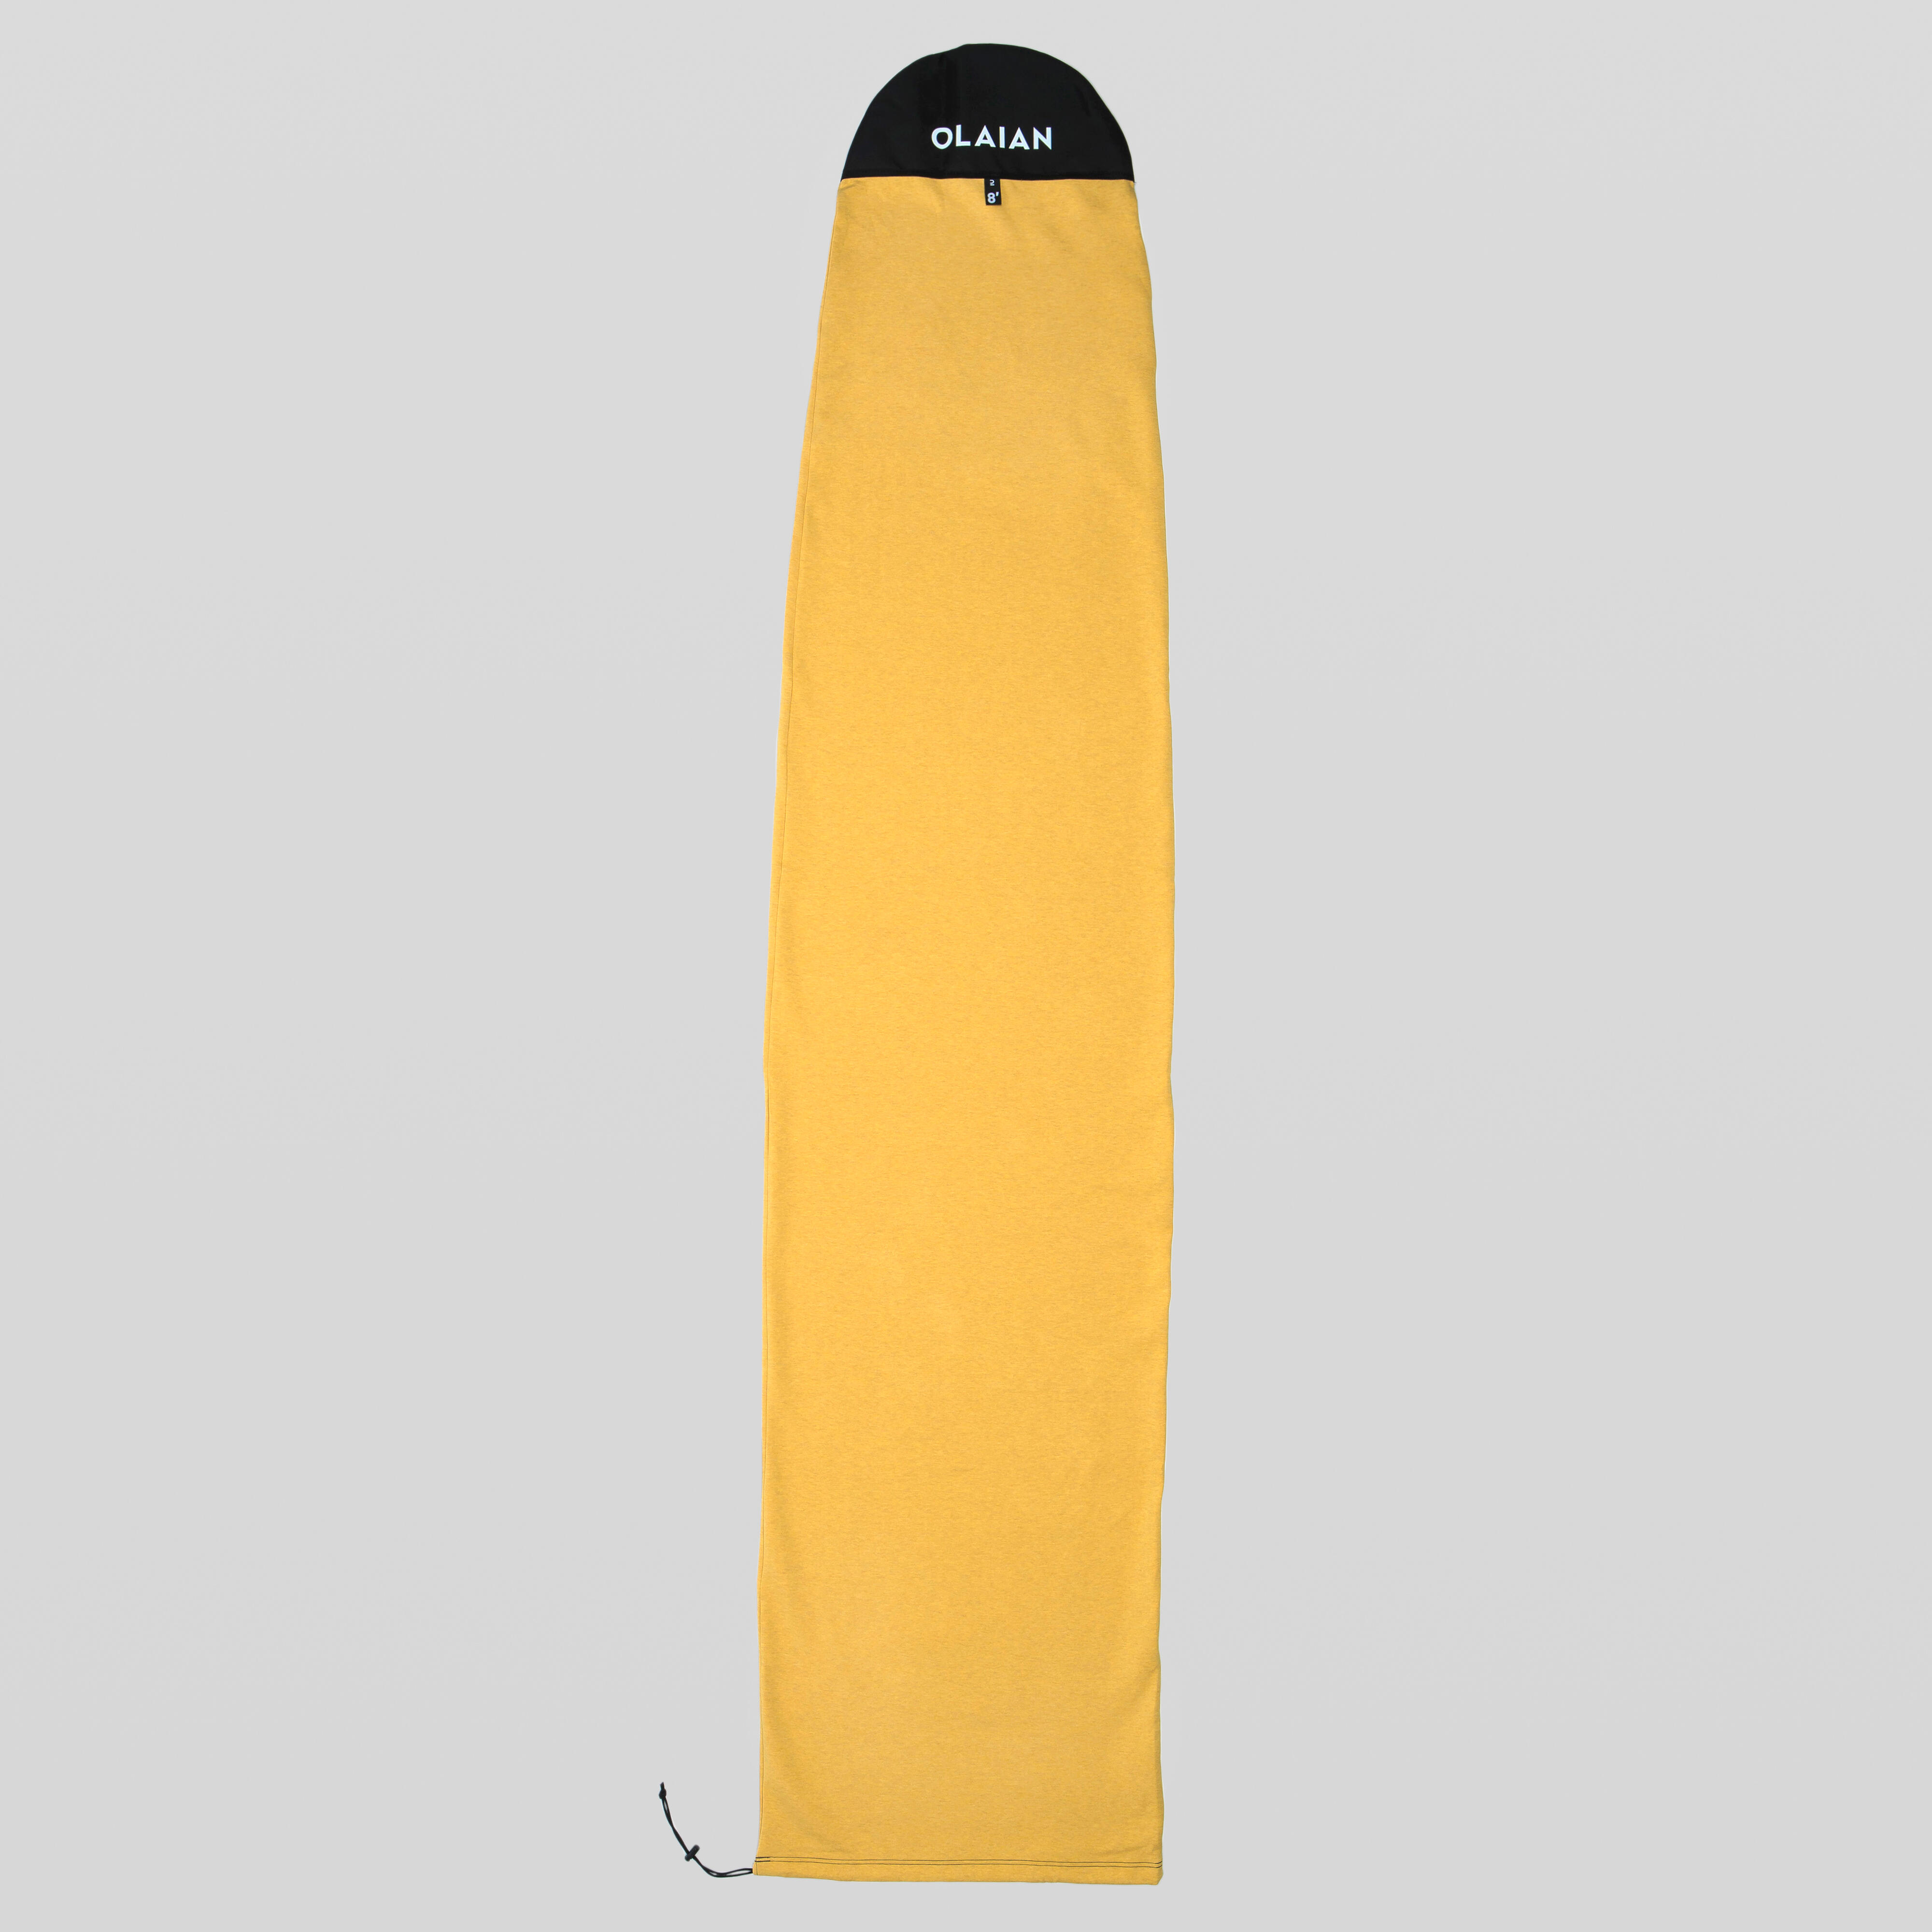 Boardbag für Surfboard maximale Größe 8'2''